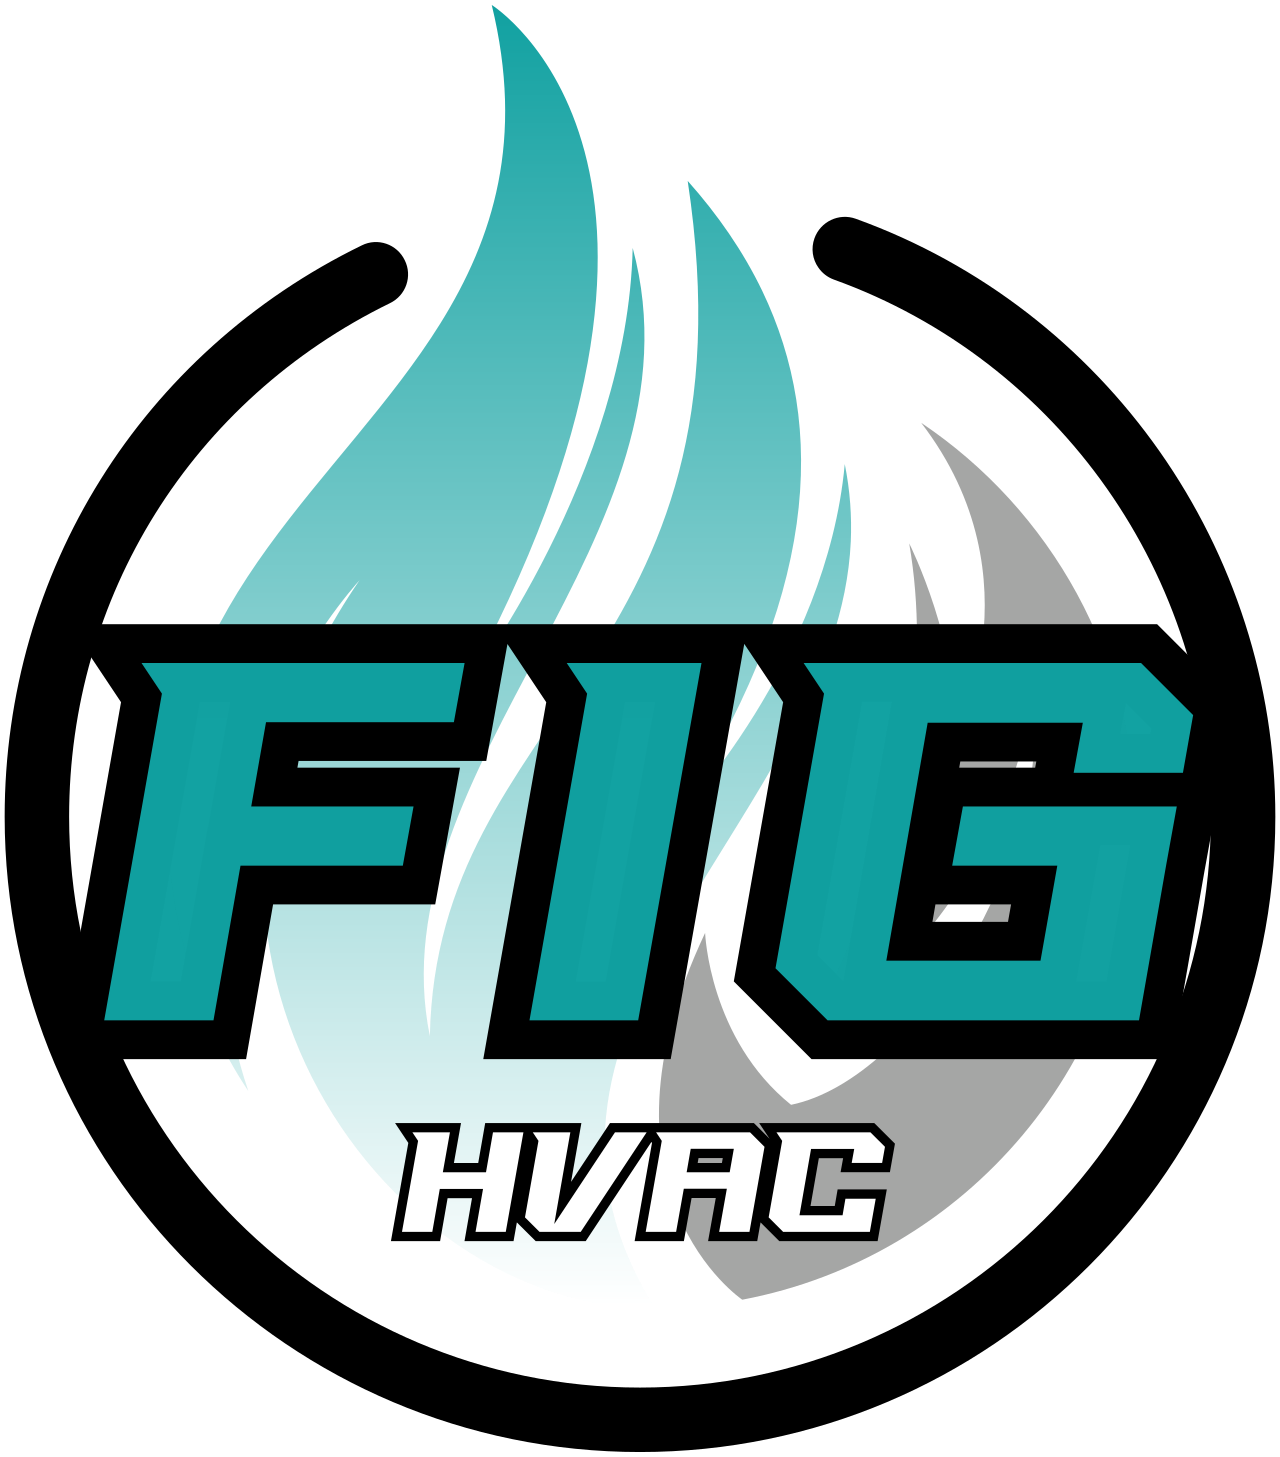 FIG 's logo